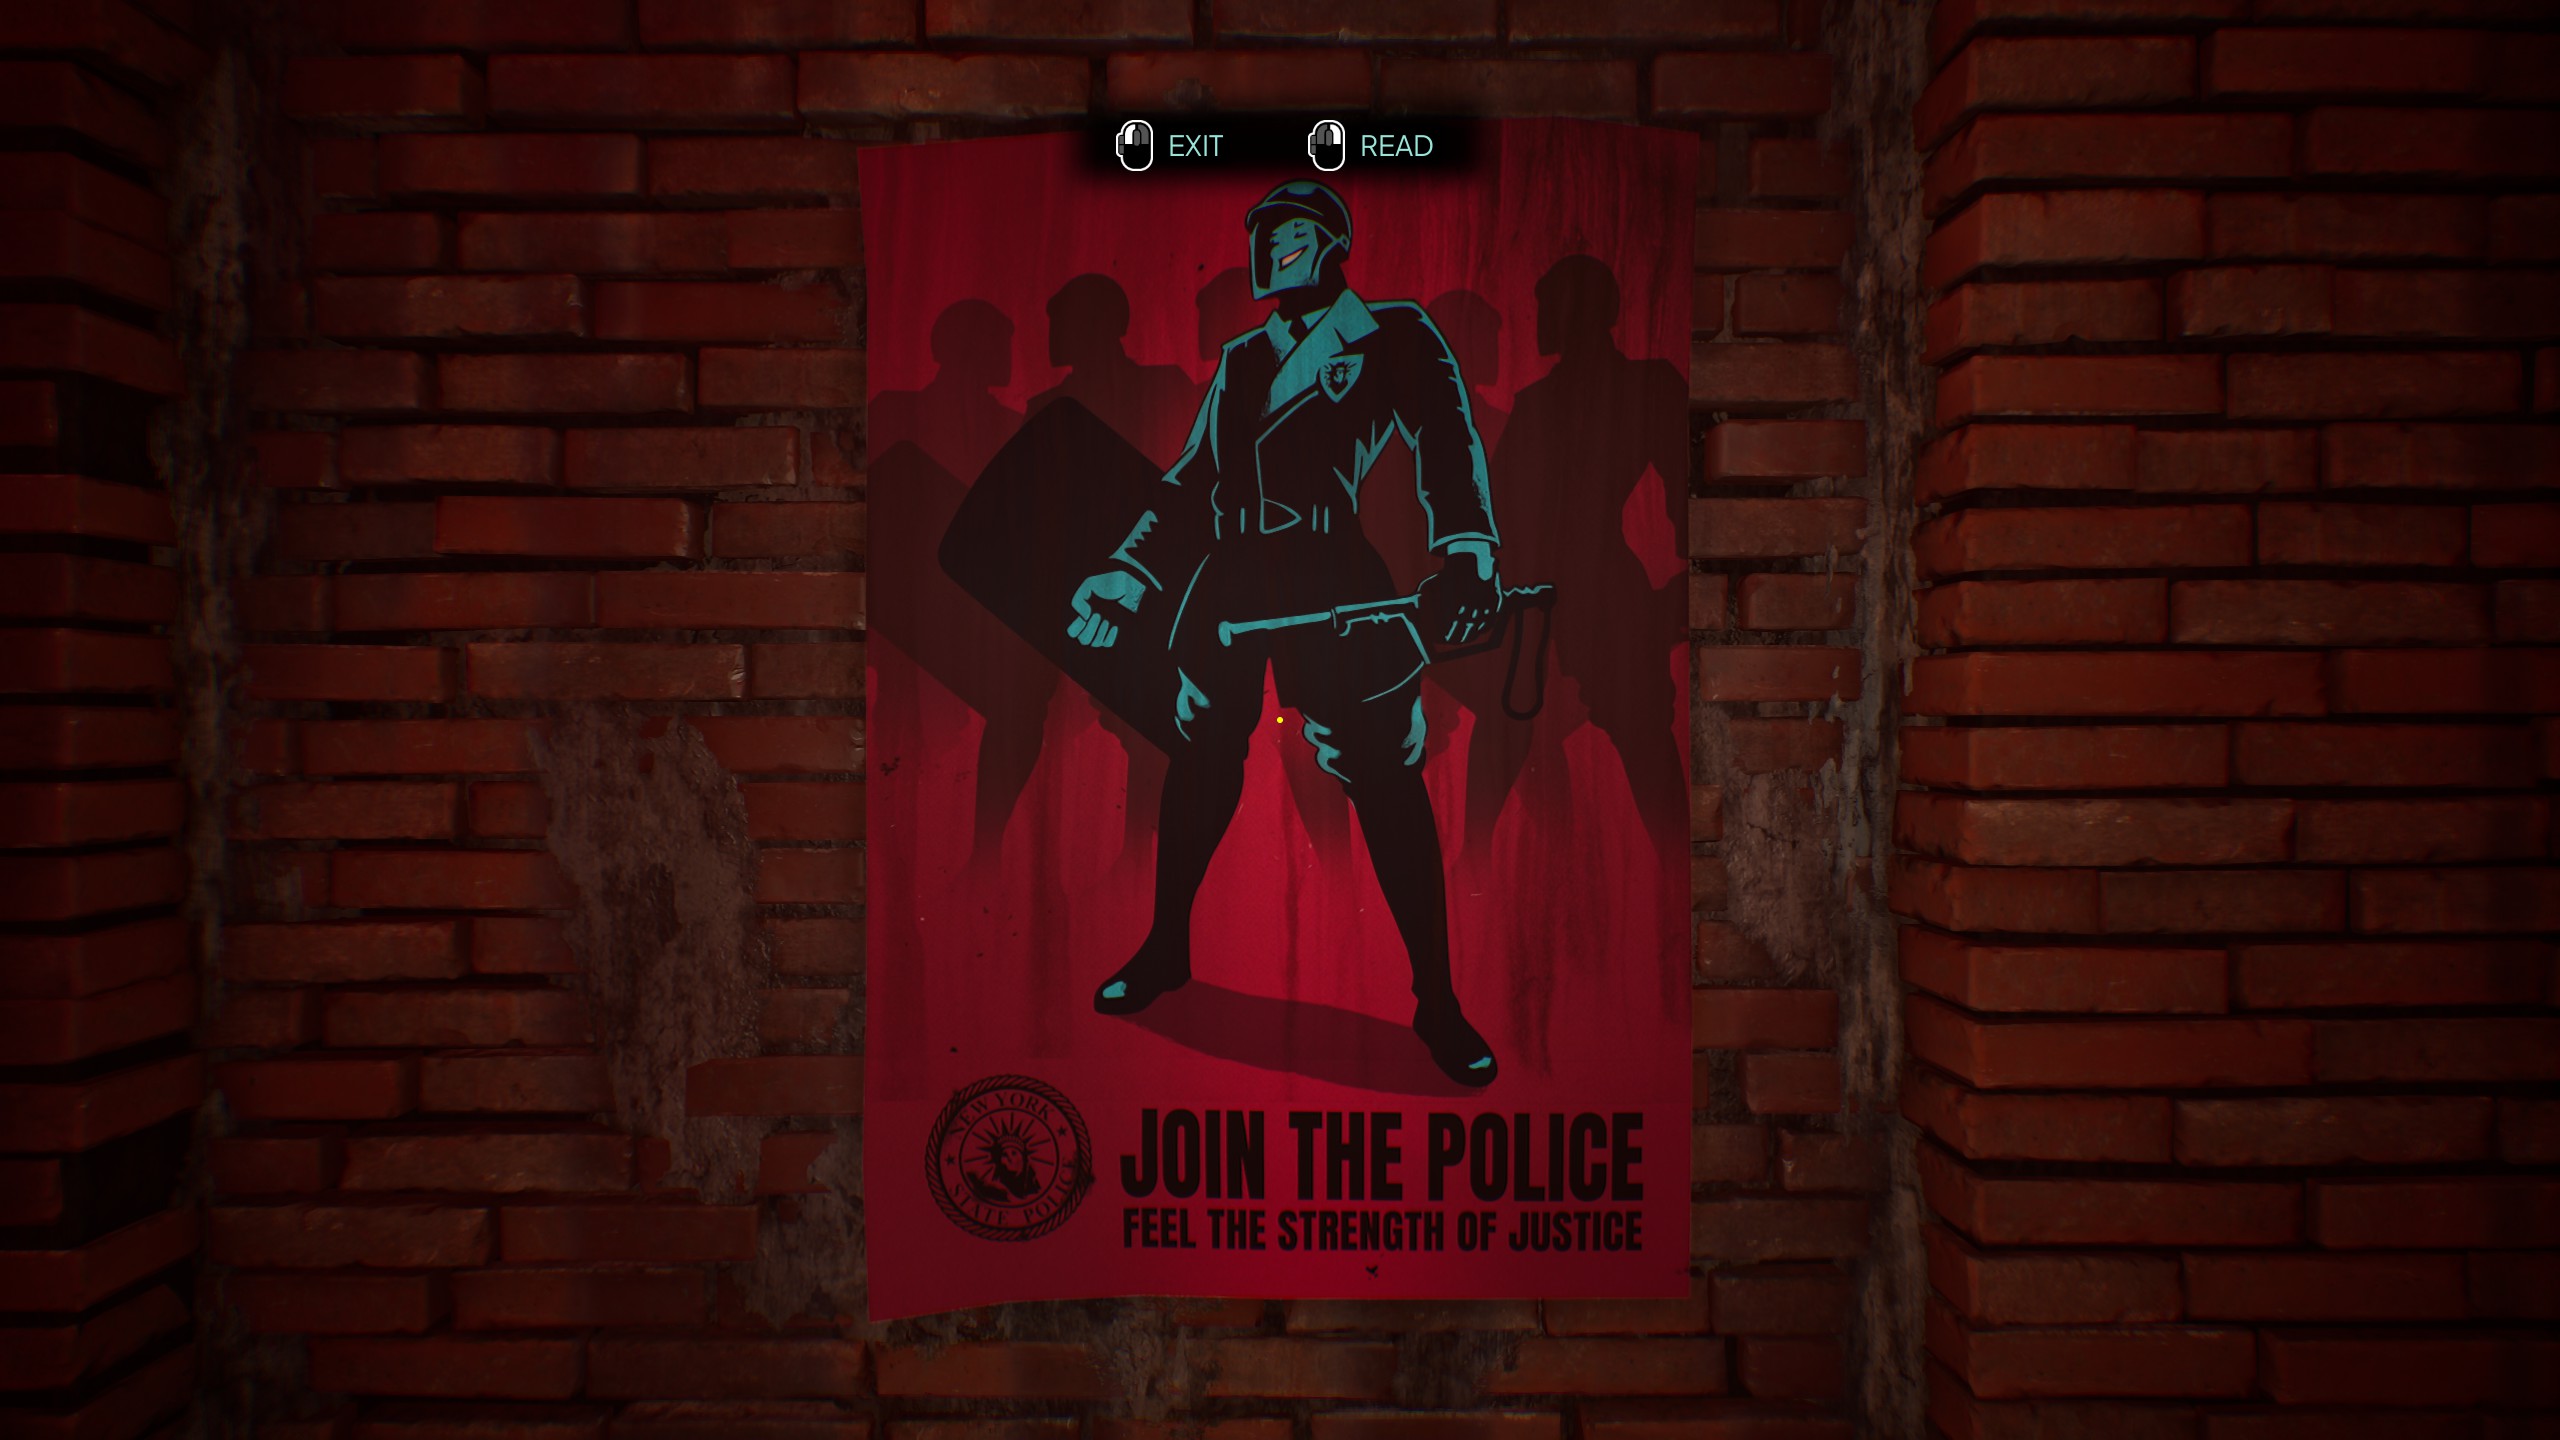 authoritarian police recruitment poster